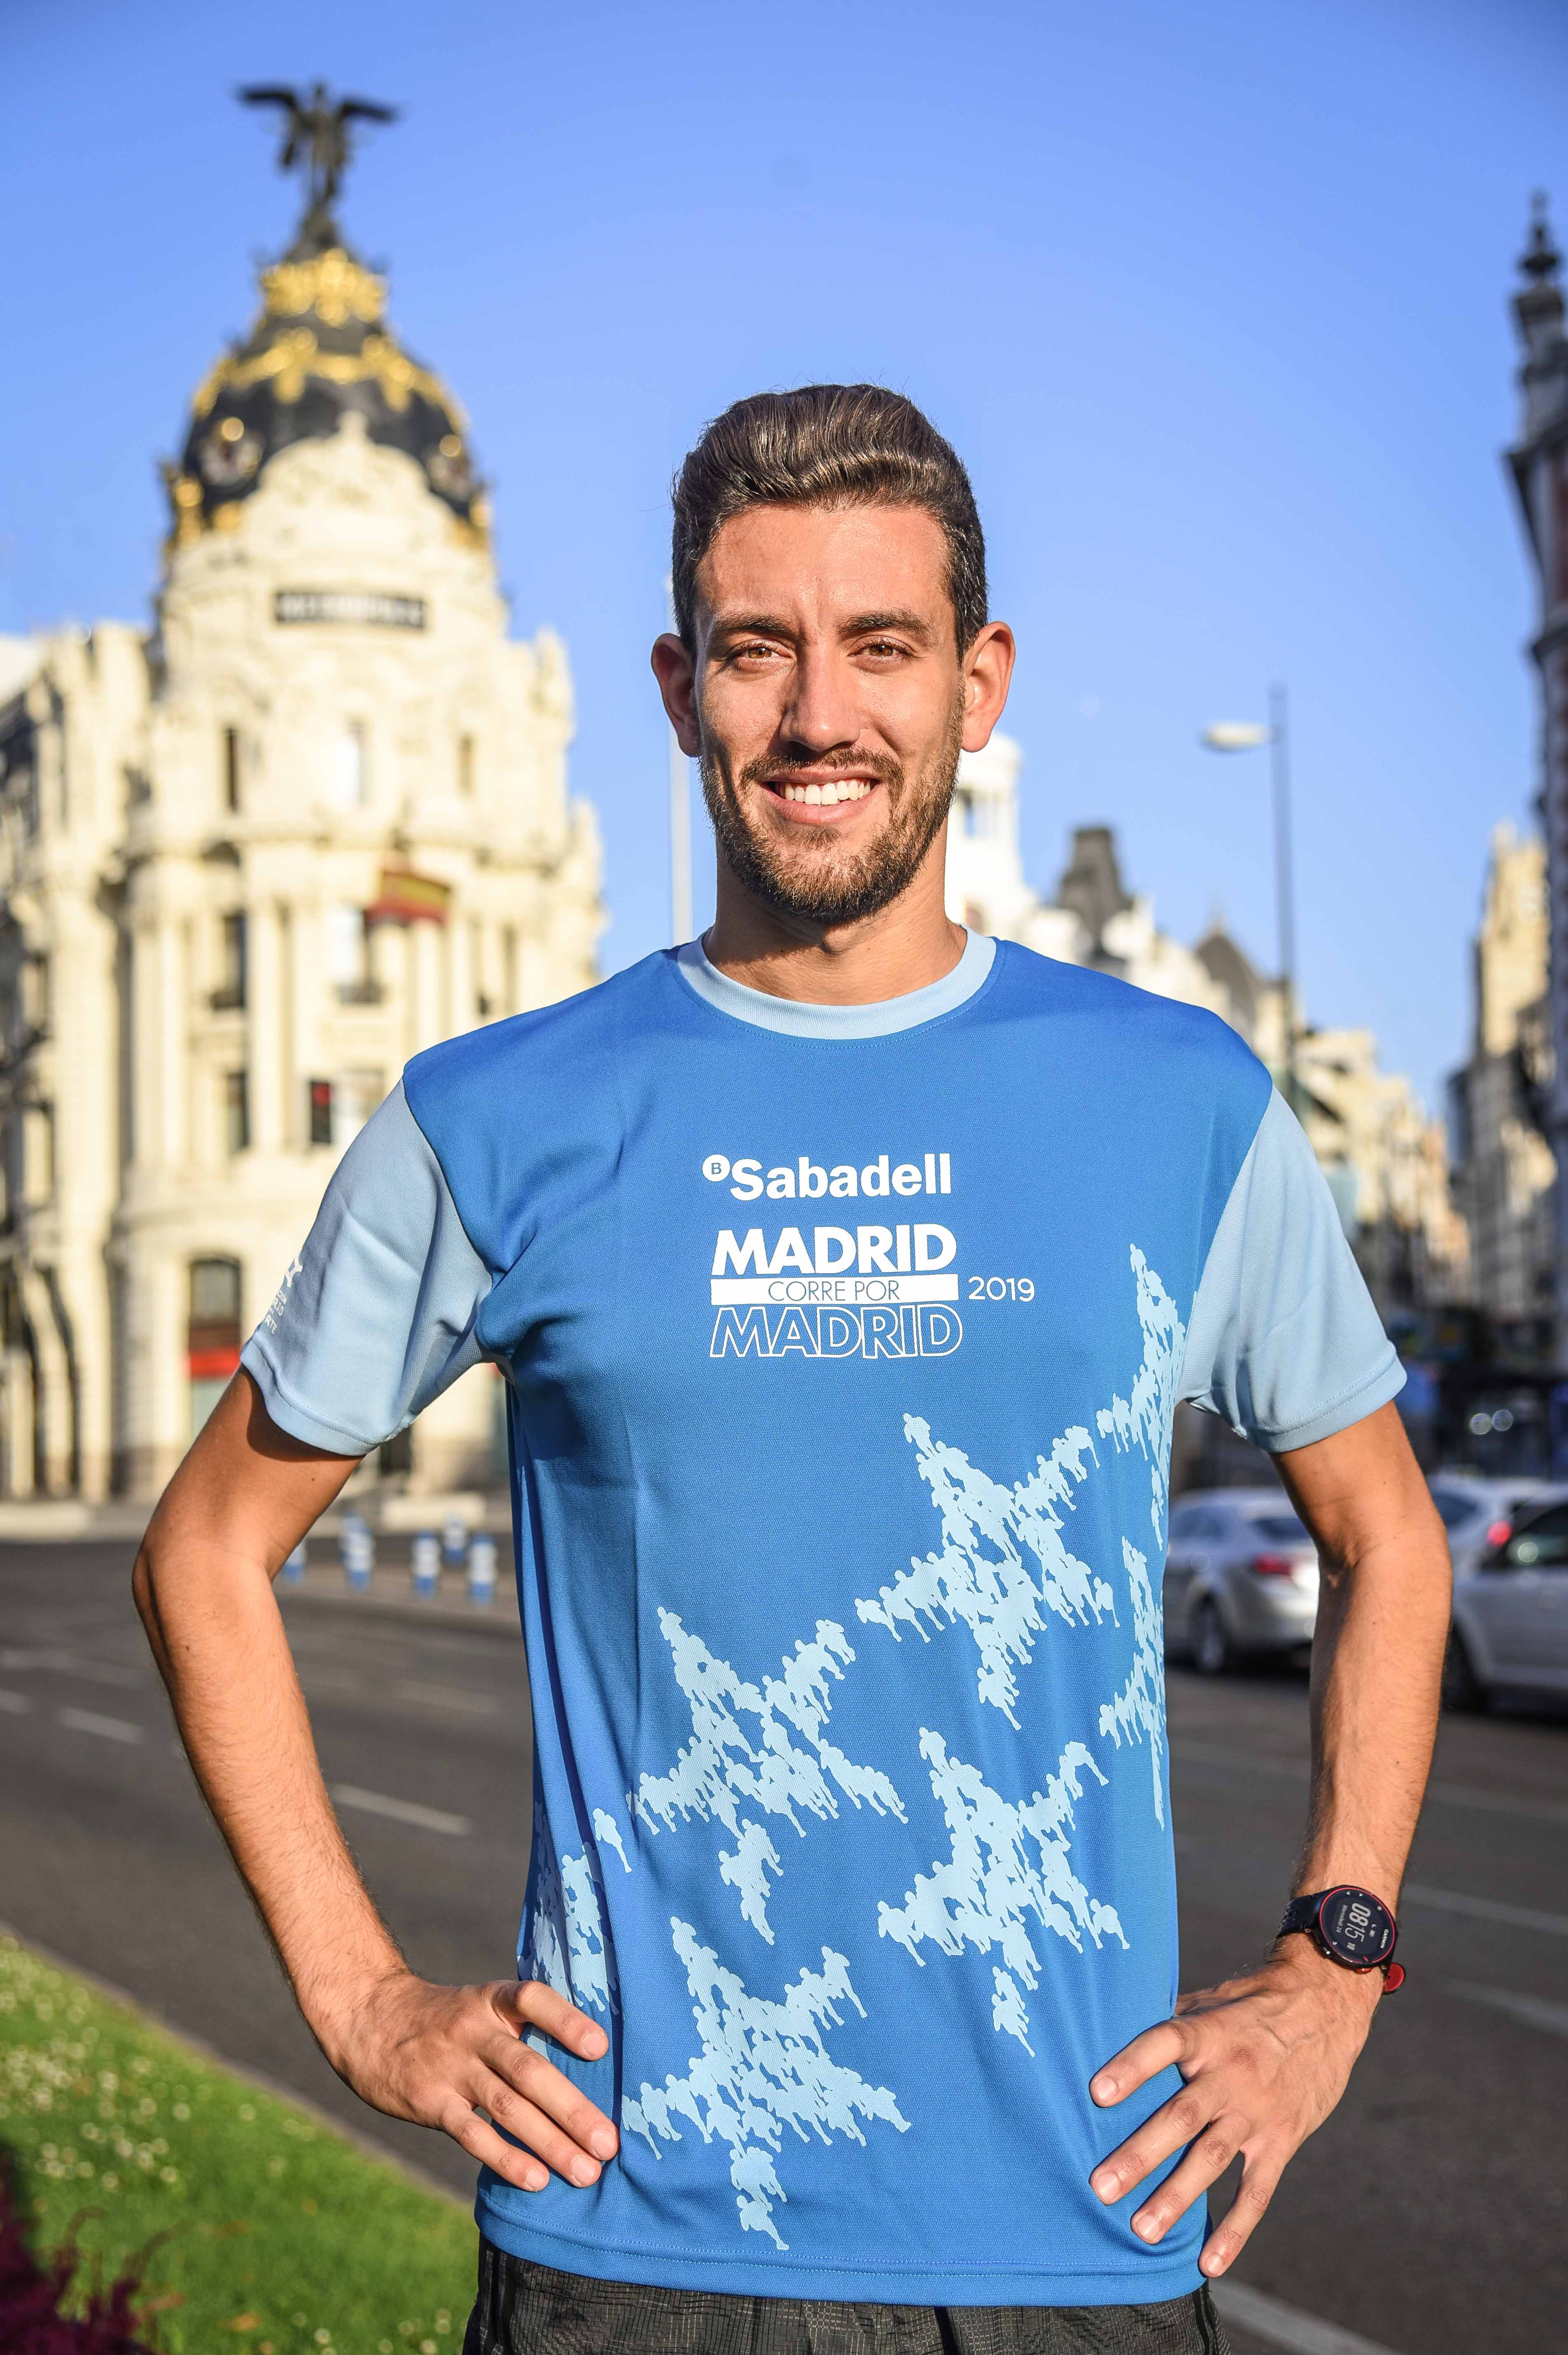 Camiseta oficial de Madrid corre por Madrid